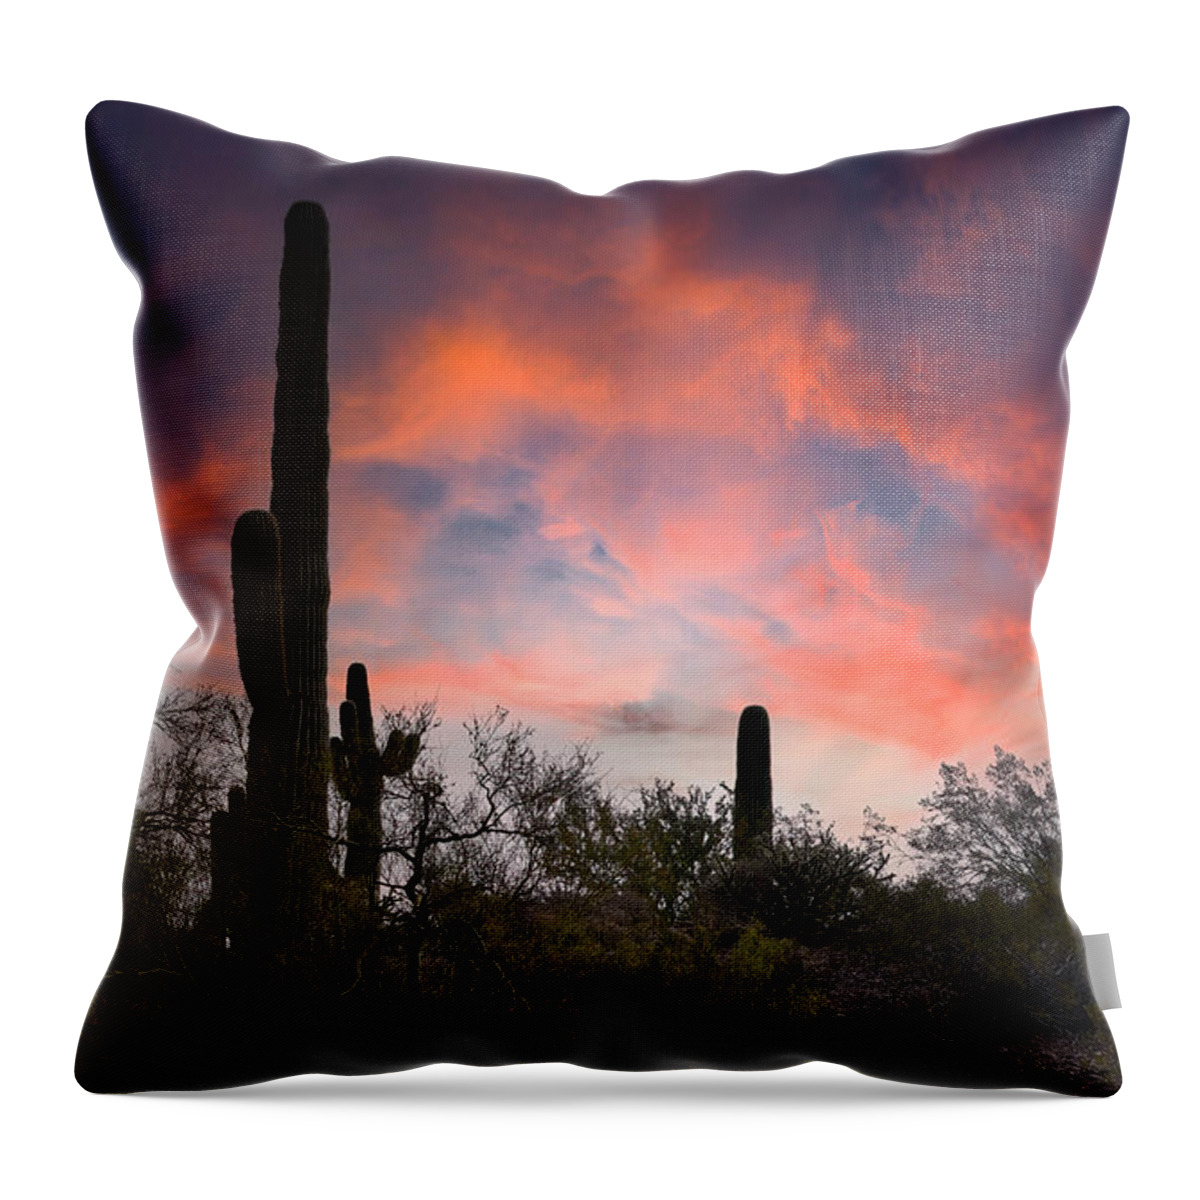 Desert Throw Pillow featuring the photograph Sonoran Desert Sunset by Phil And Karen Rispin